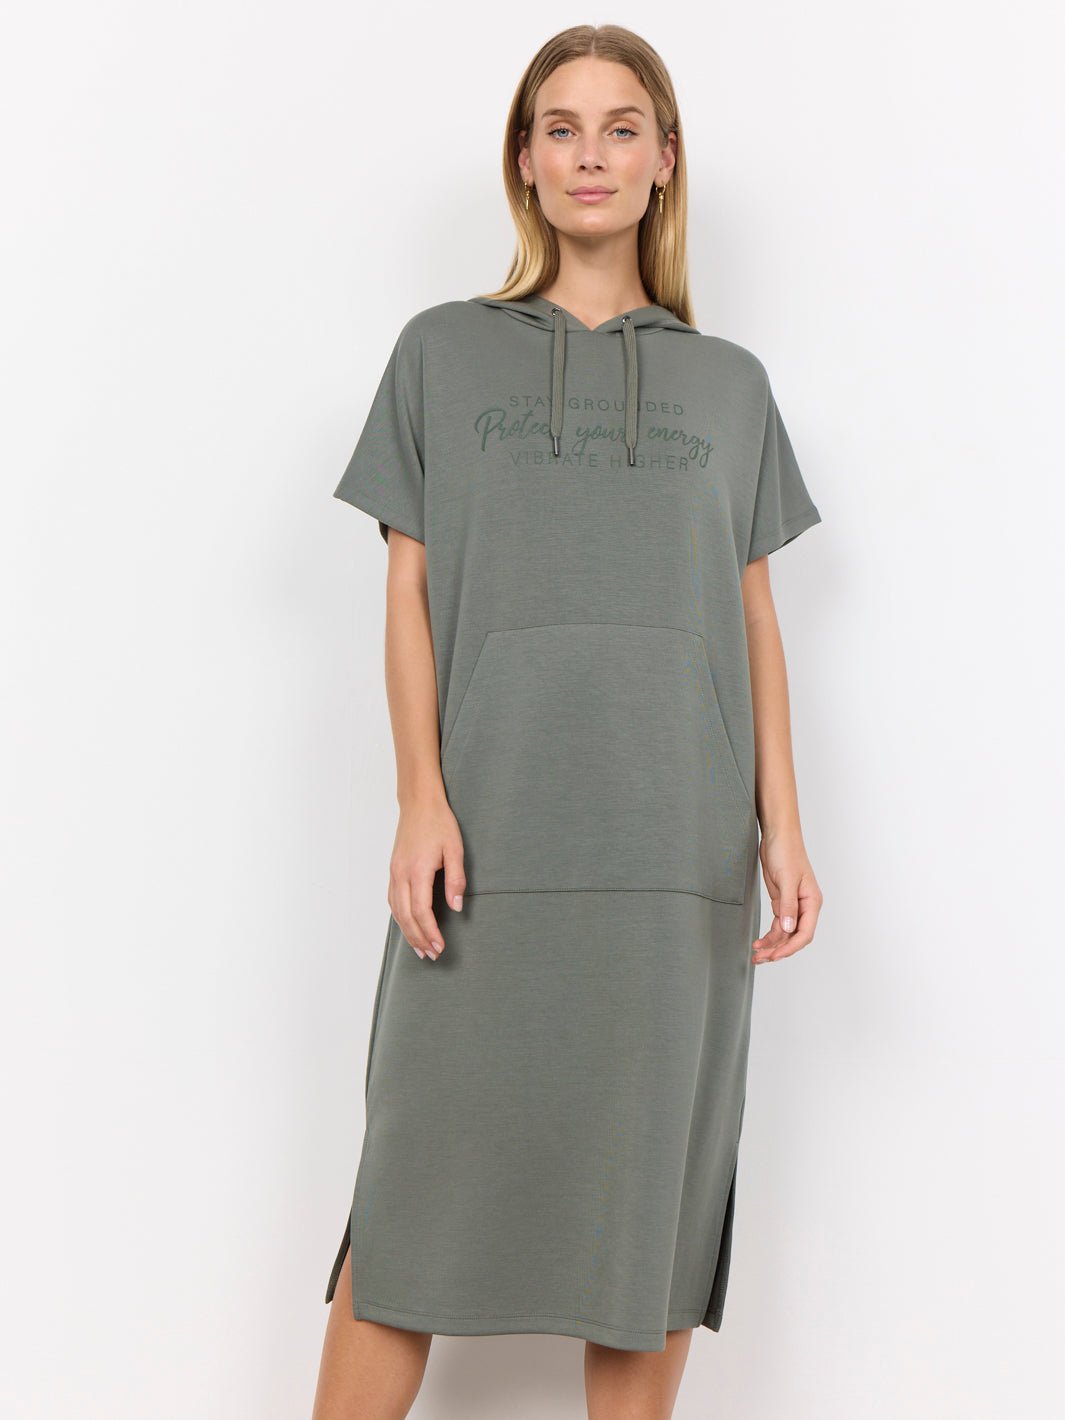 Soya Concept Banu 178 dress dusty olive - Online-Mode